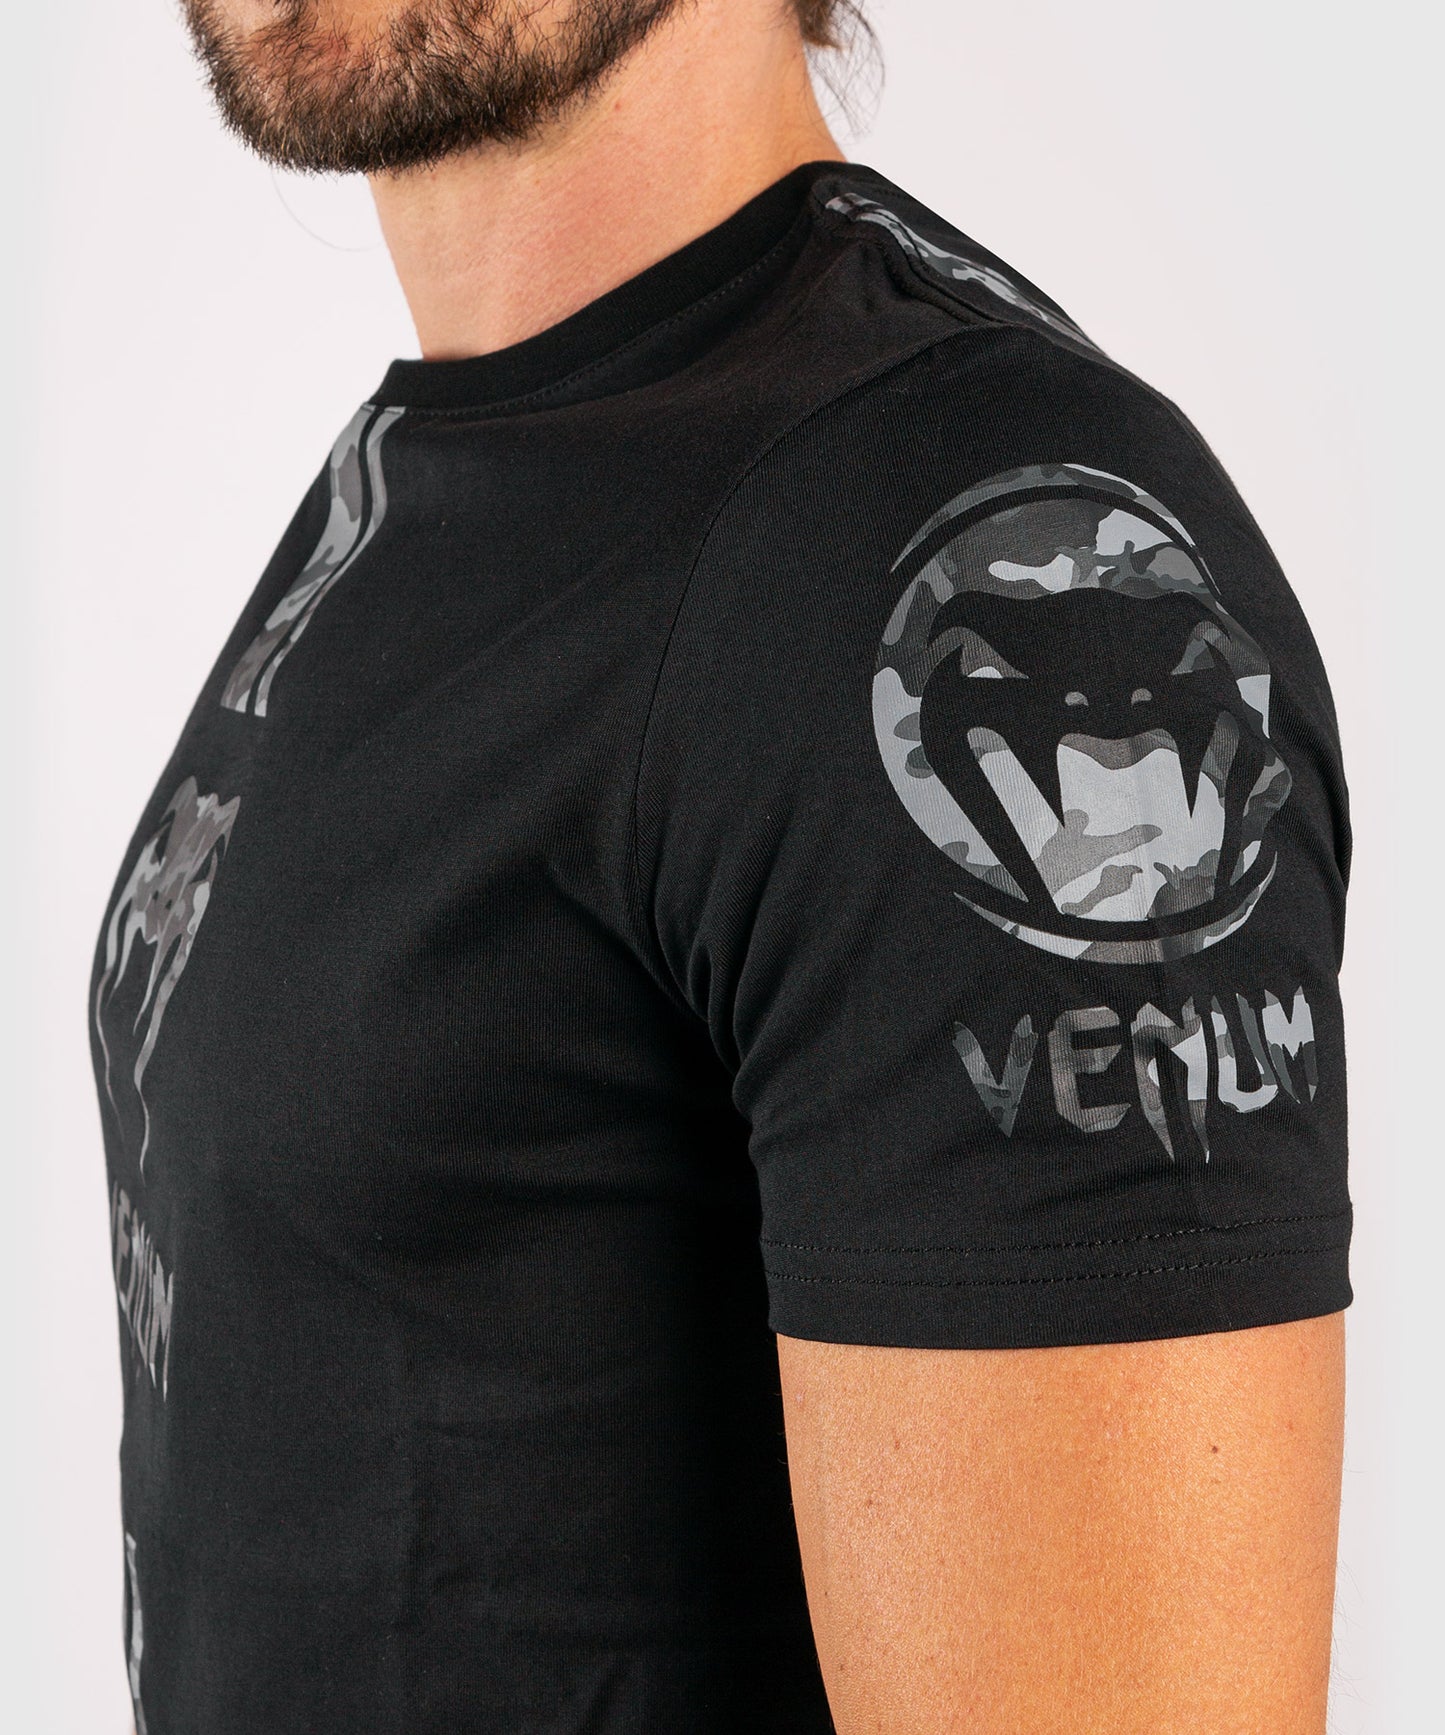 Venum Logos T-Shirt - Schwarz/Urban camo